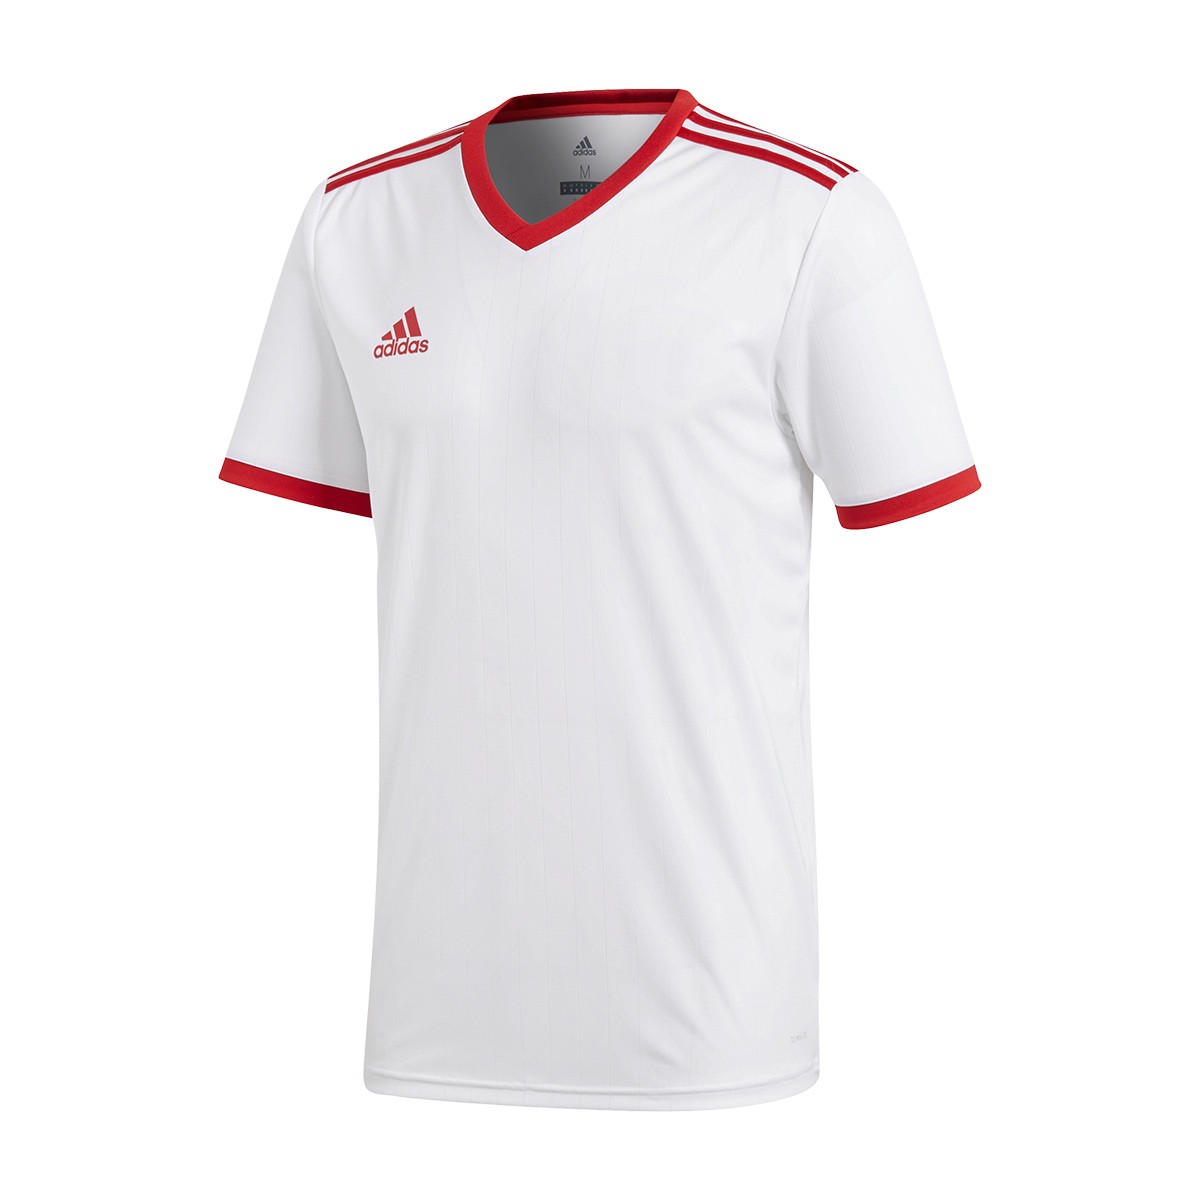 Jersey adidas Tabela 18 m/c White-Power red - Fútbol Emotion